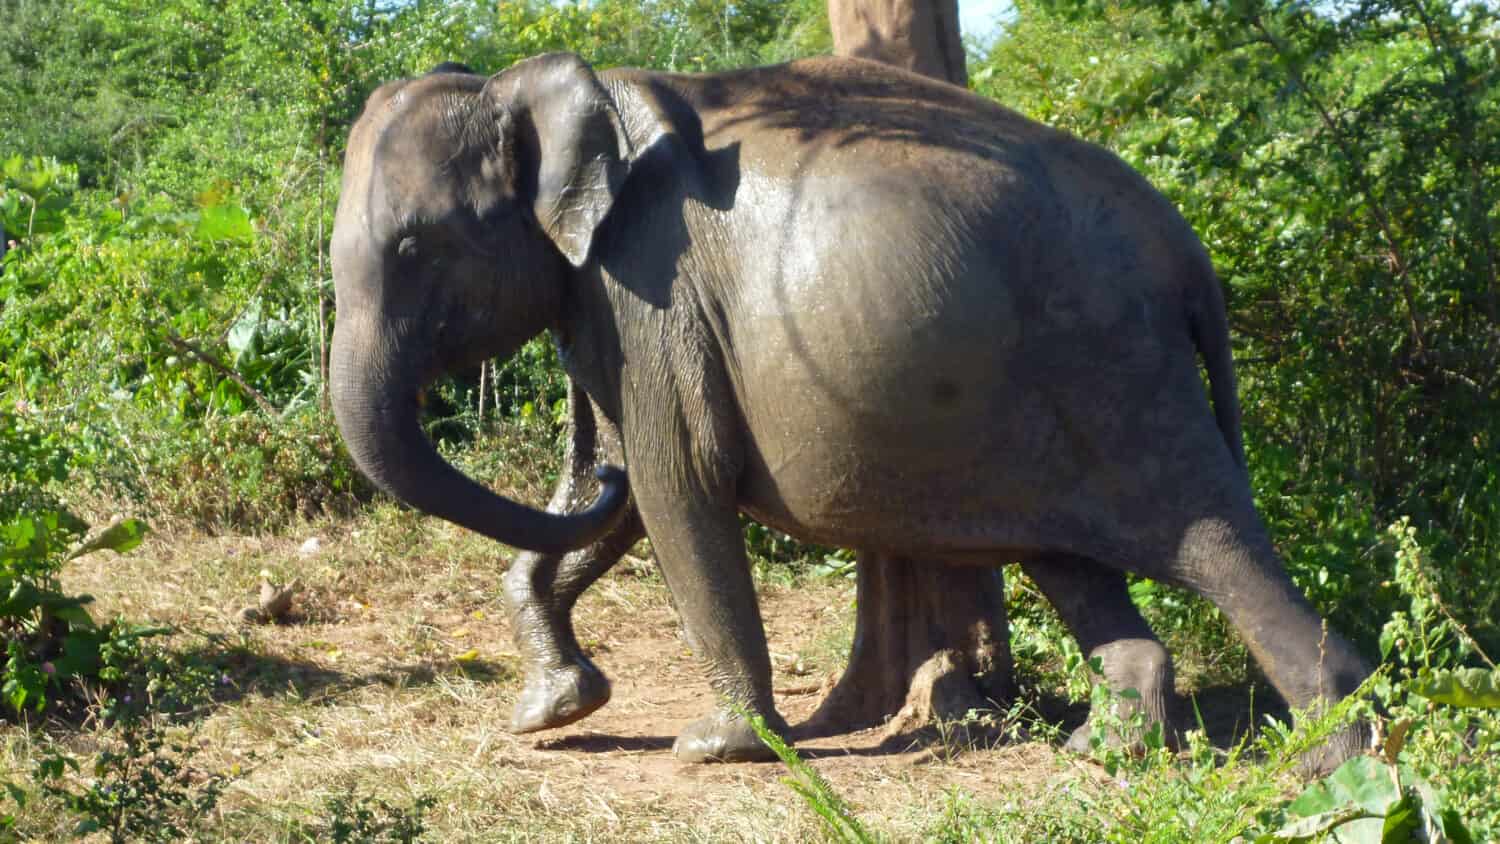 Heavily pregnant elephant in Udawalawa national park